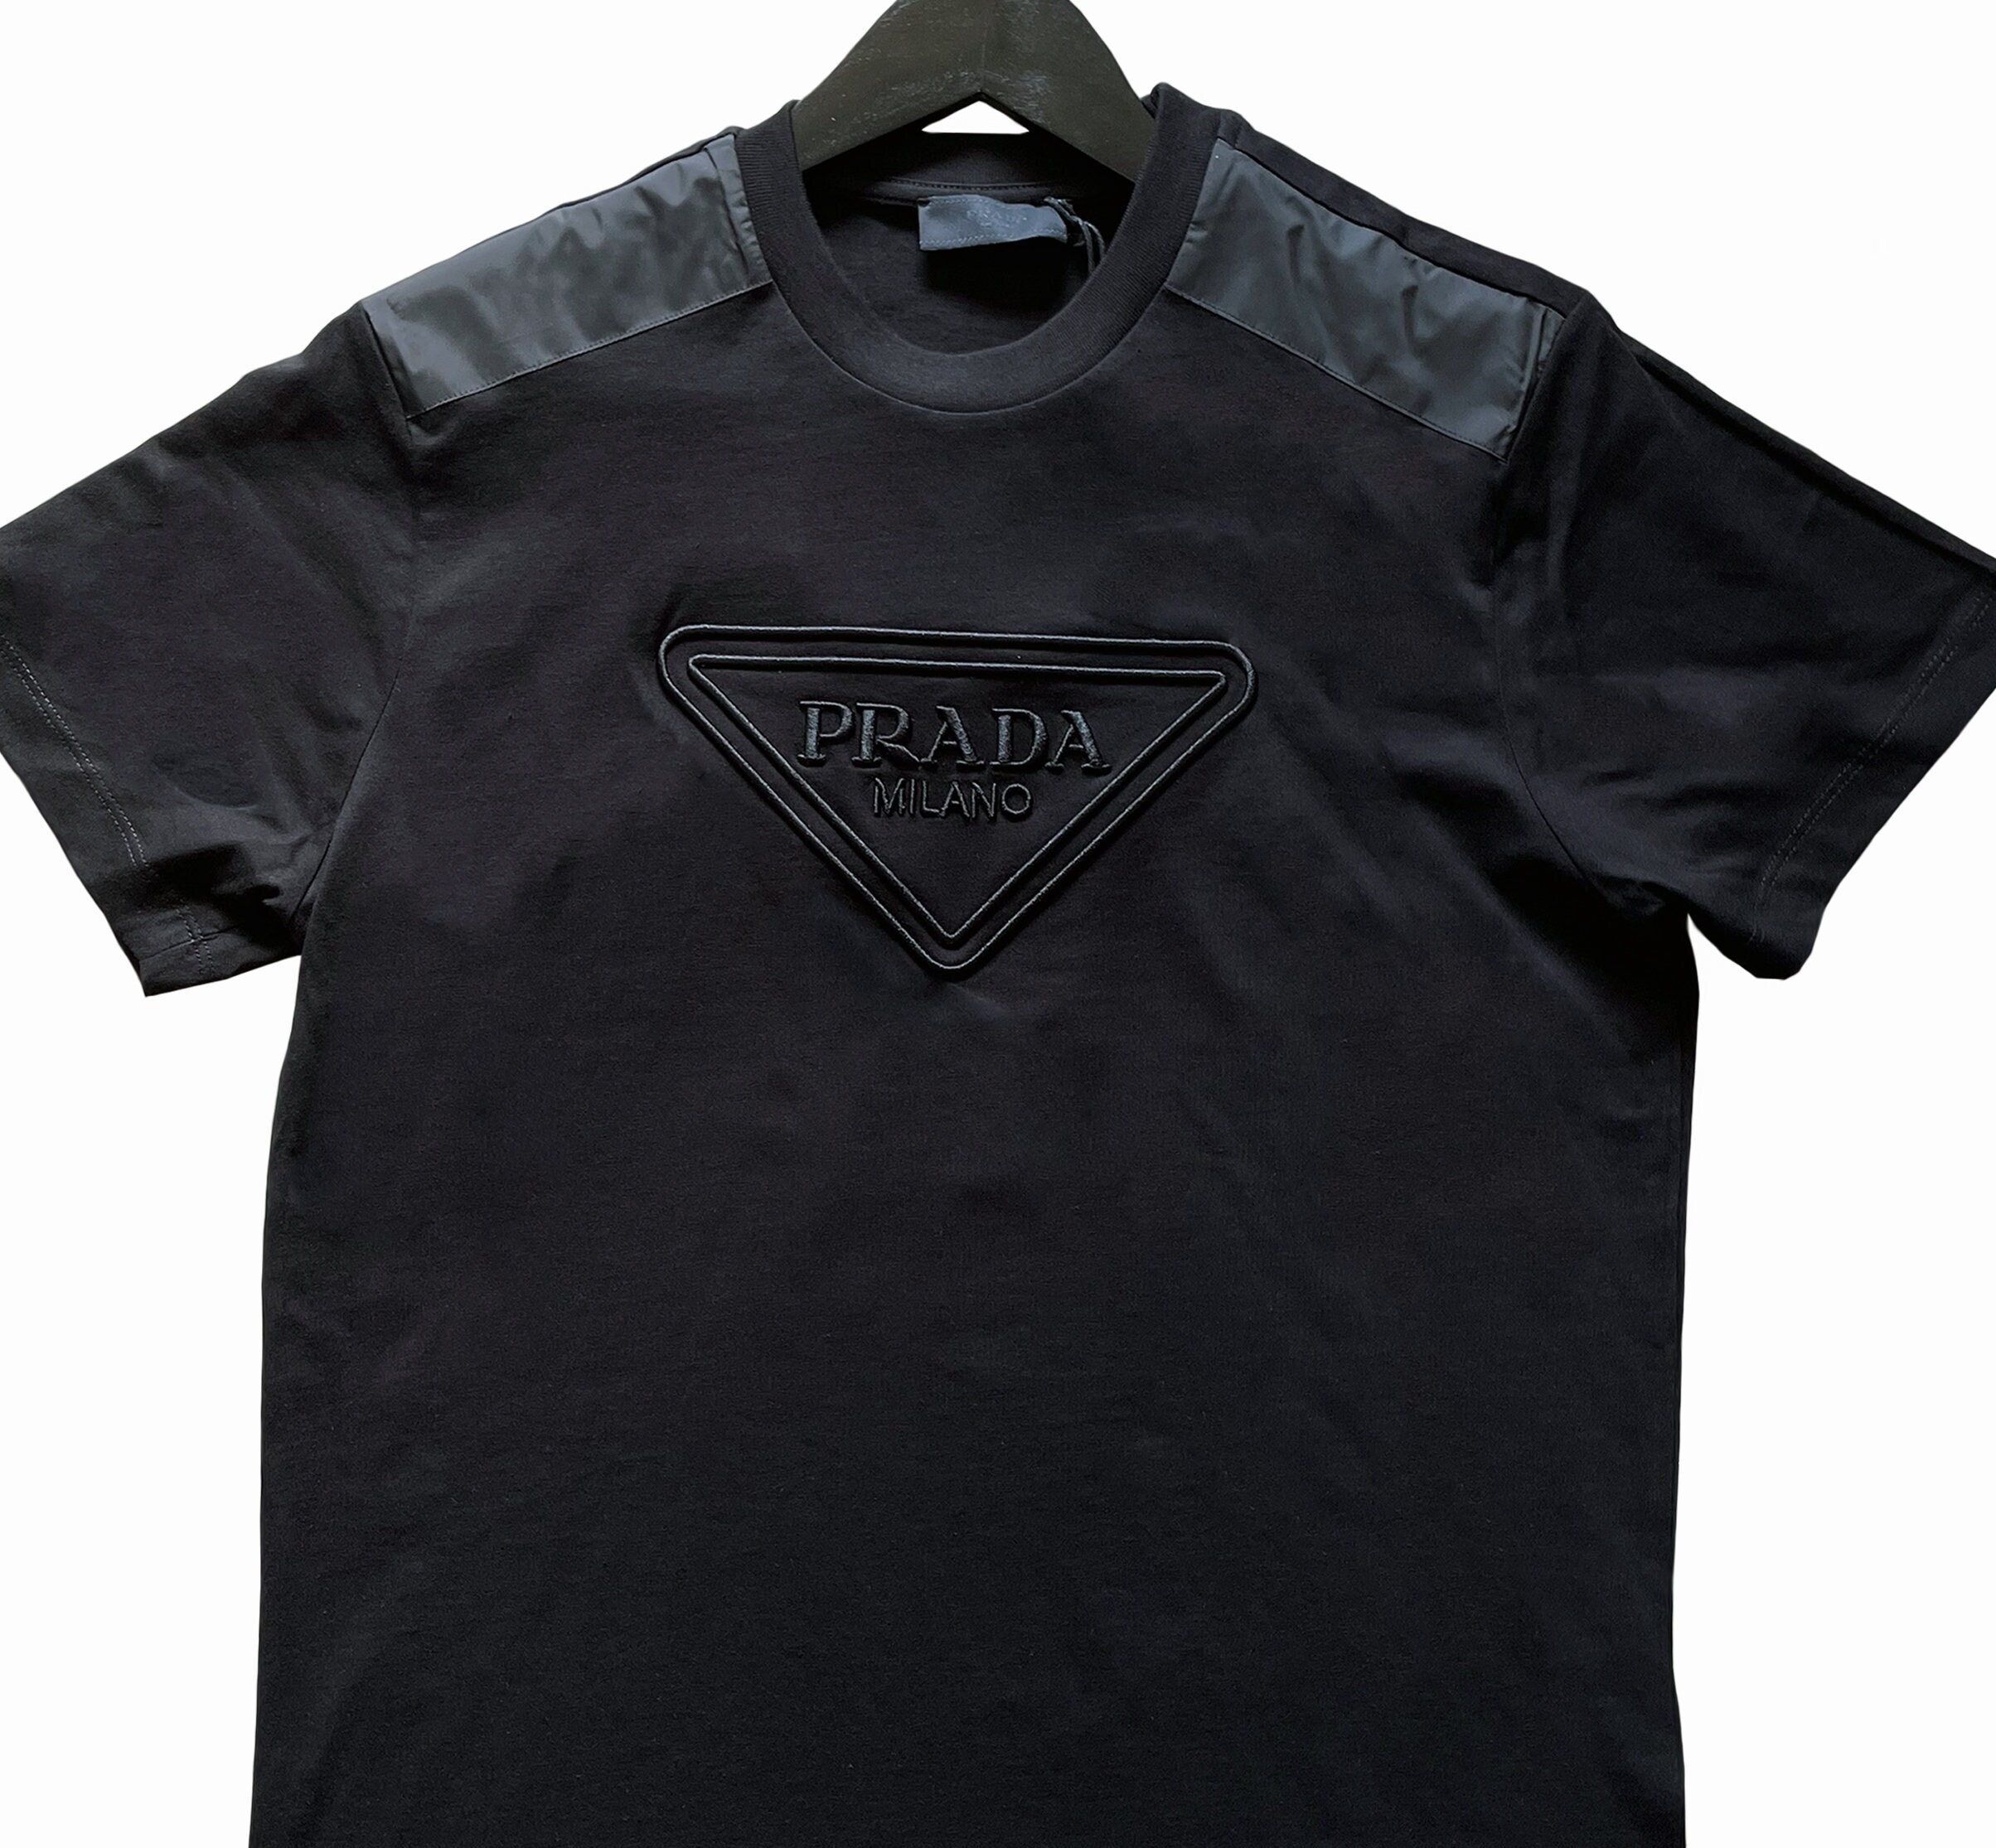 Buy Cheap Louis Vuitton T-Shirts for MEN #999936384 from